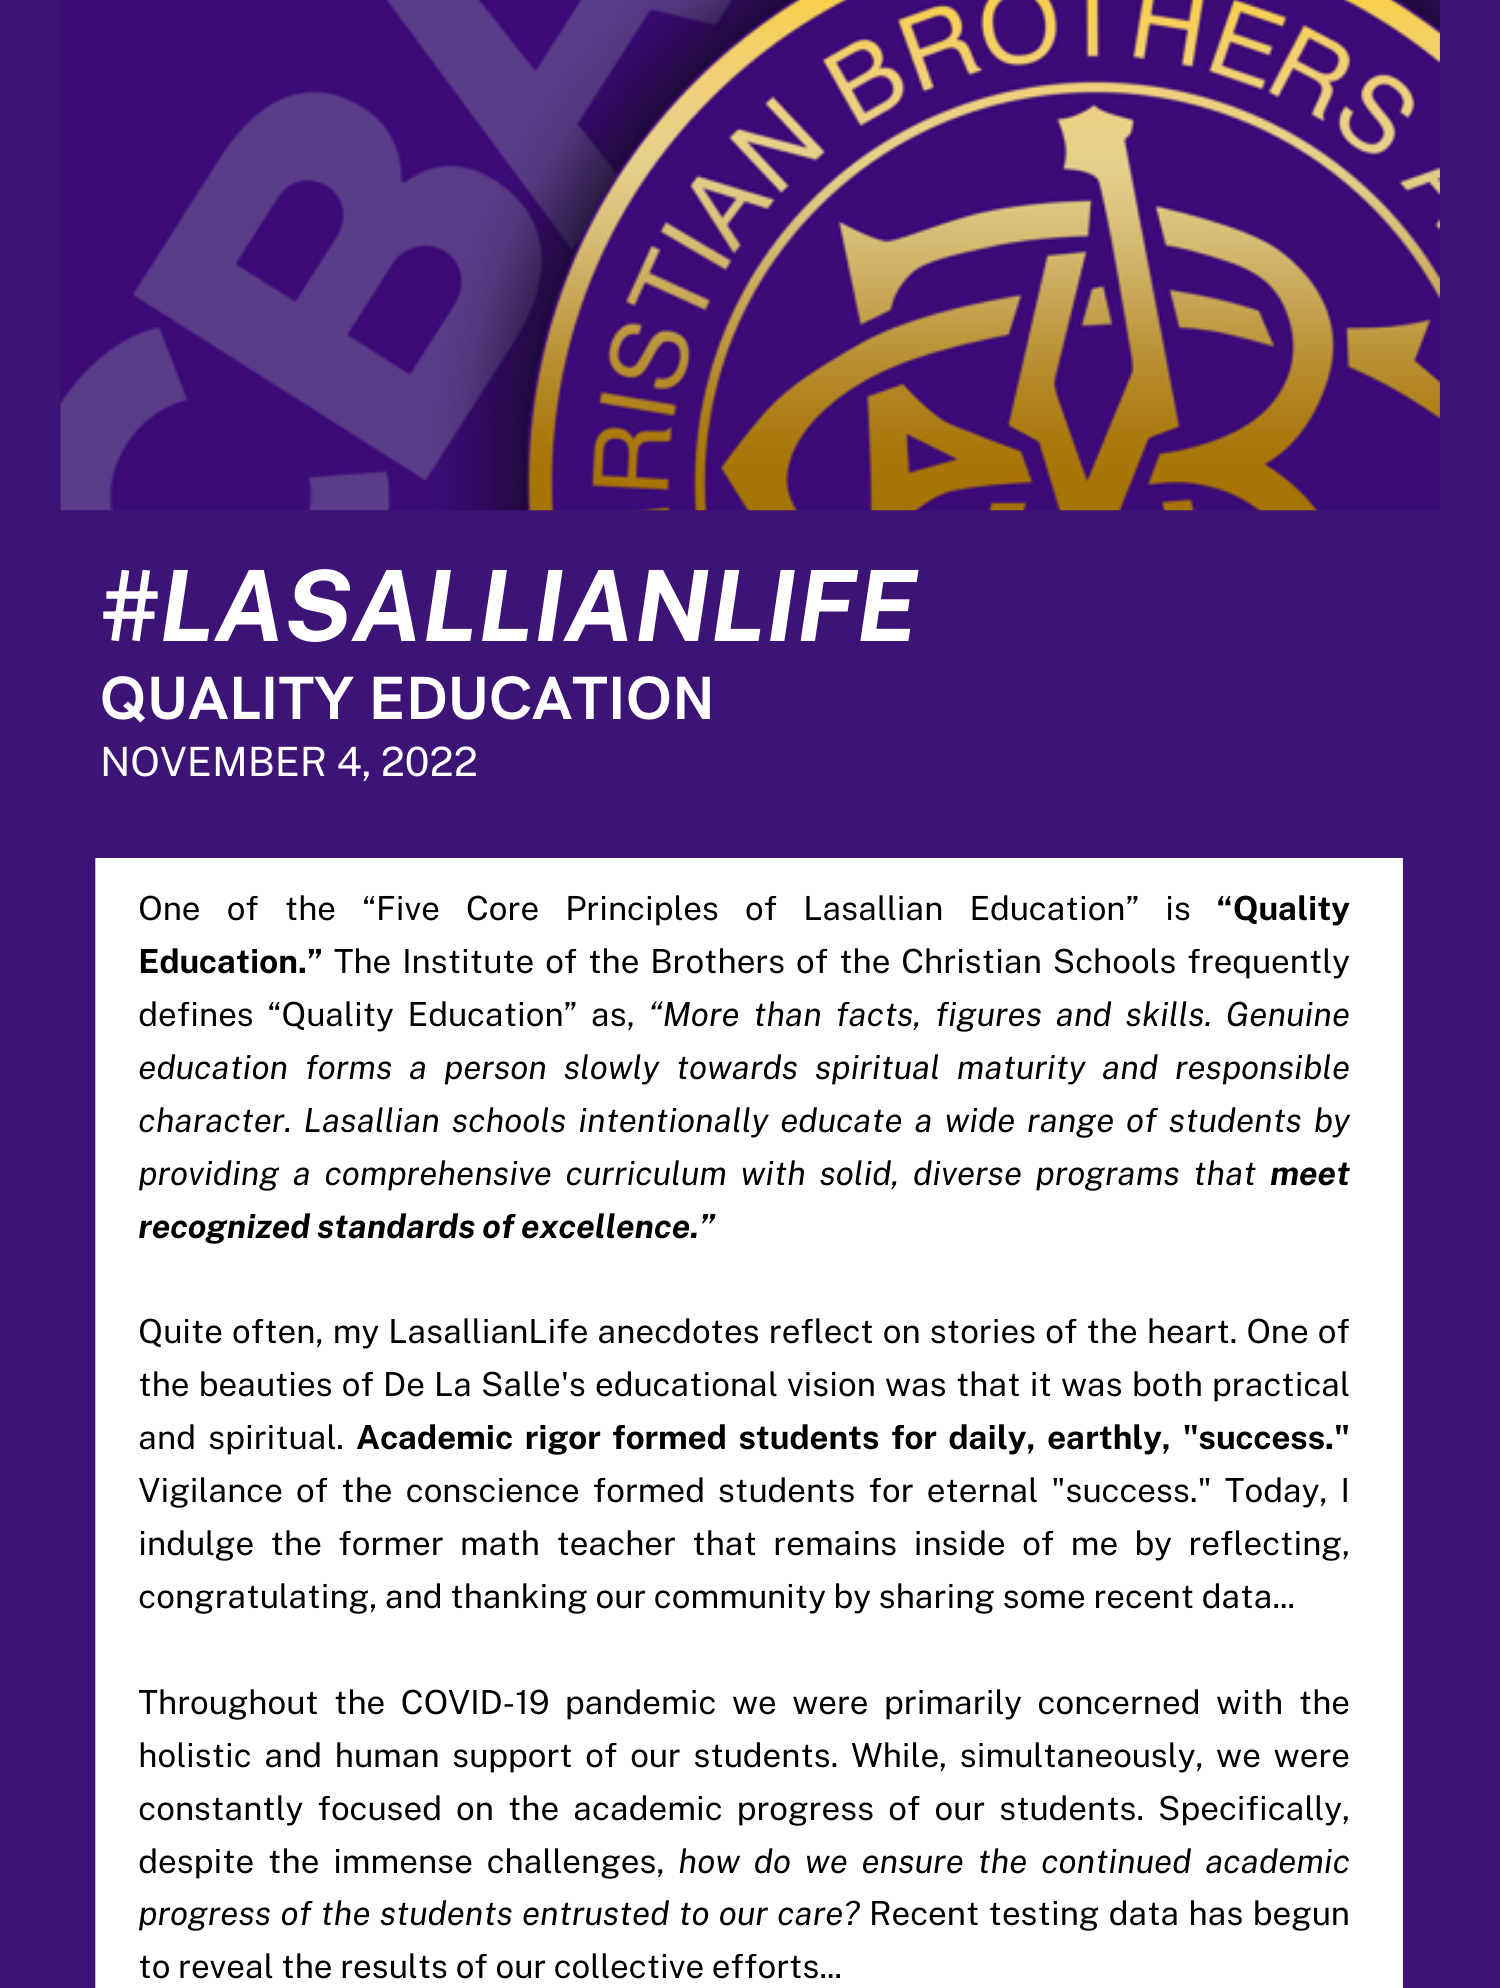 quality education near syracuse ny image of lasallian life poster